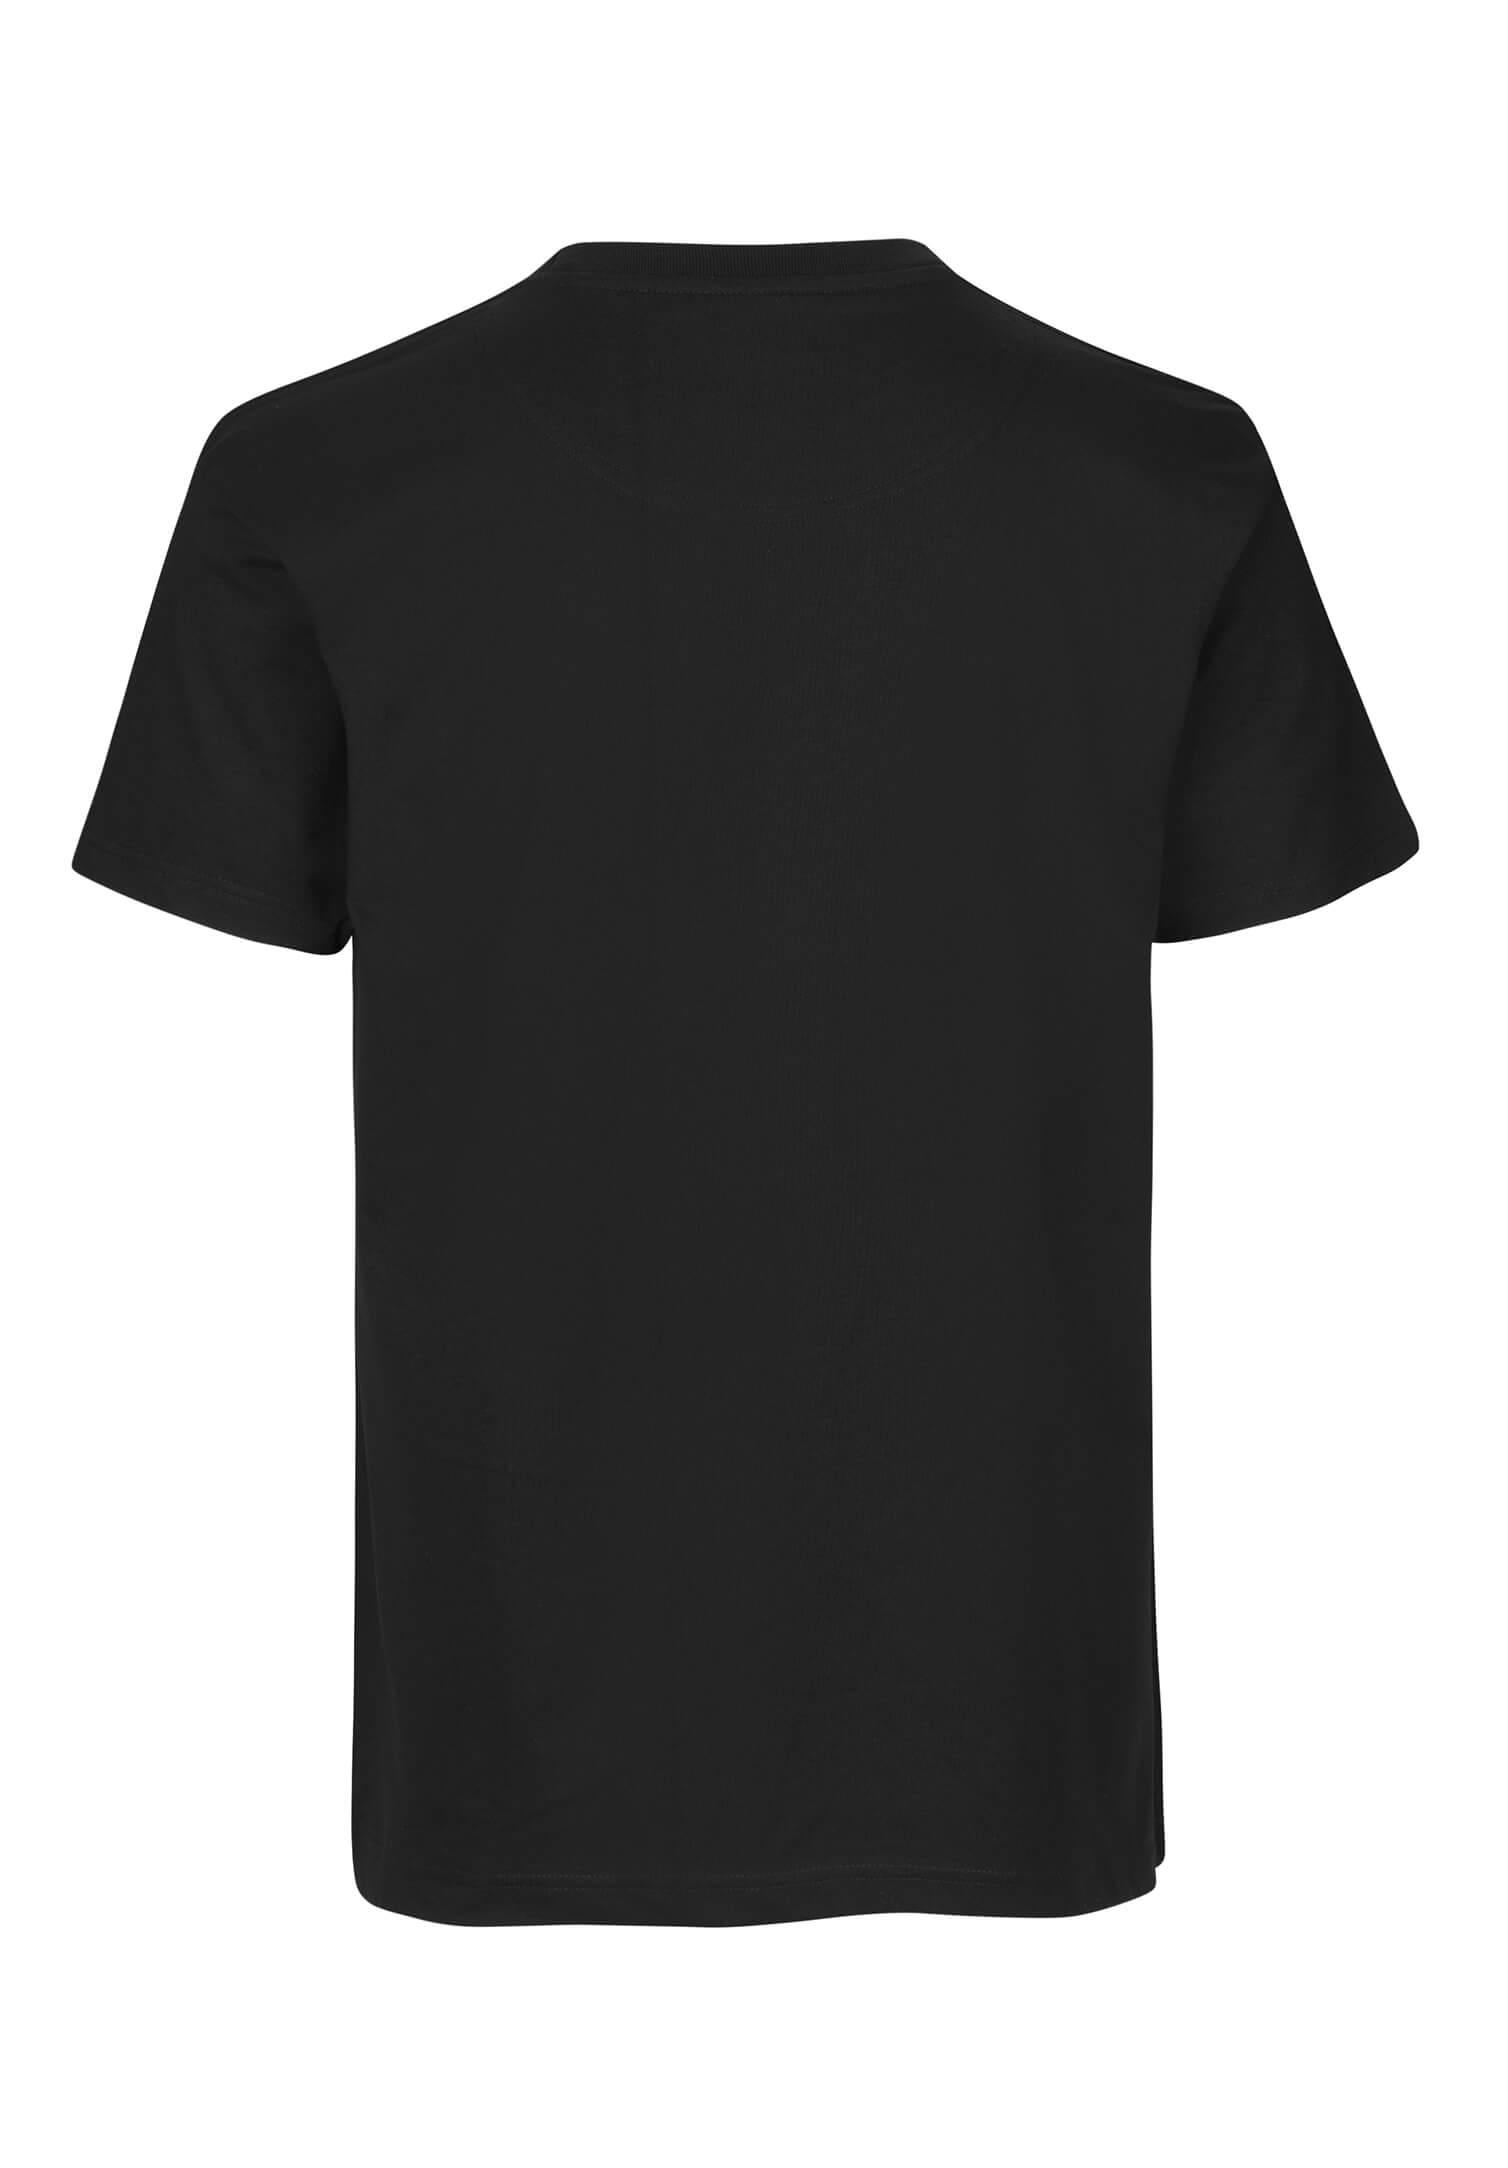 Bestatter T-Shirt - schwarz - L